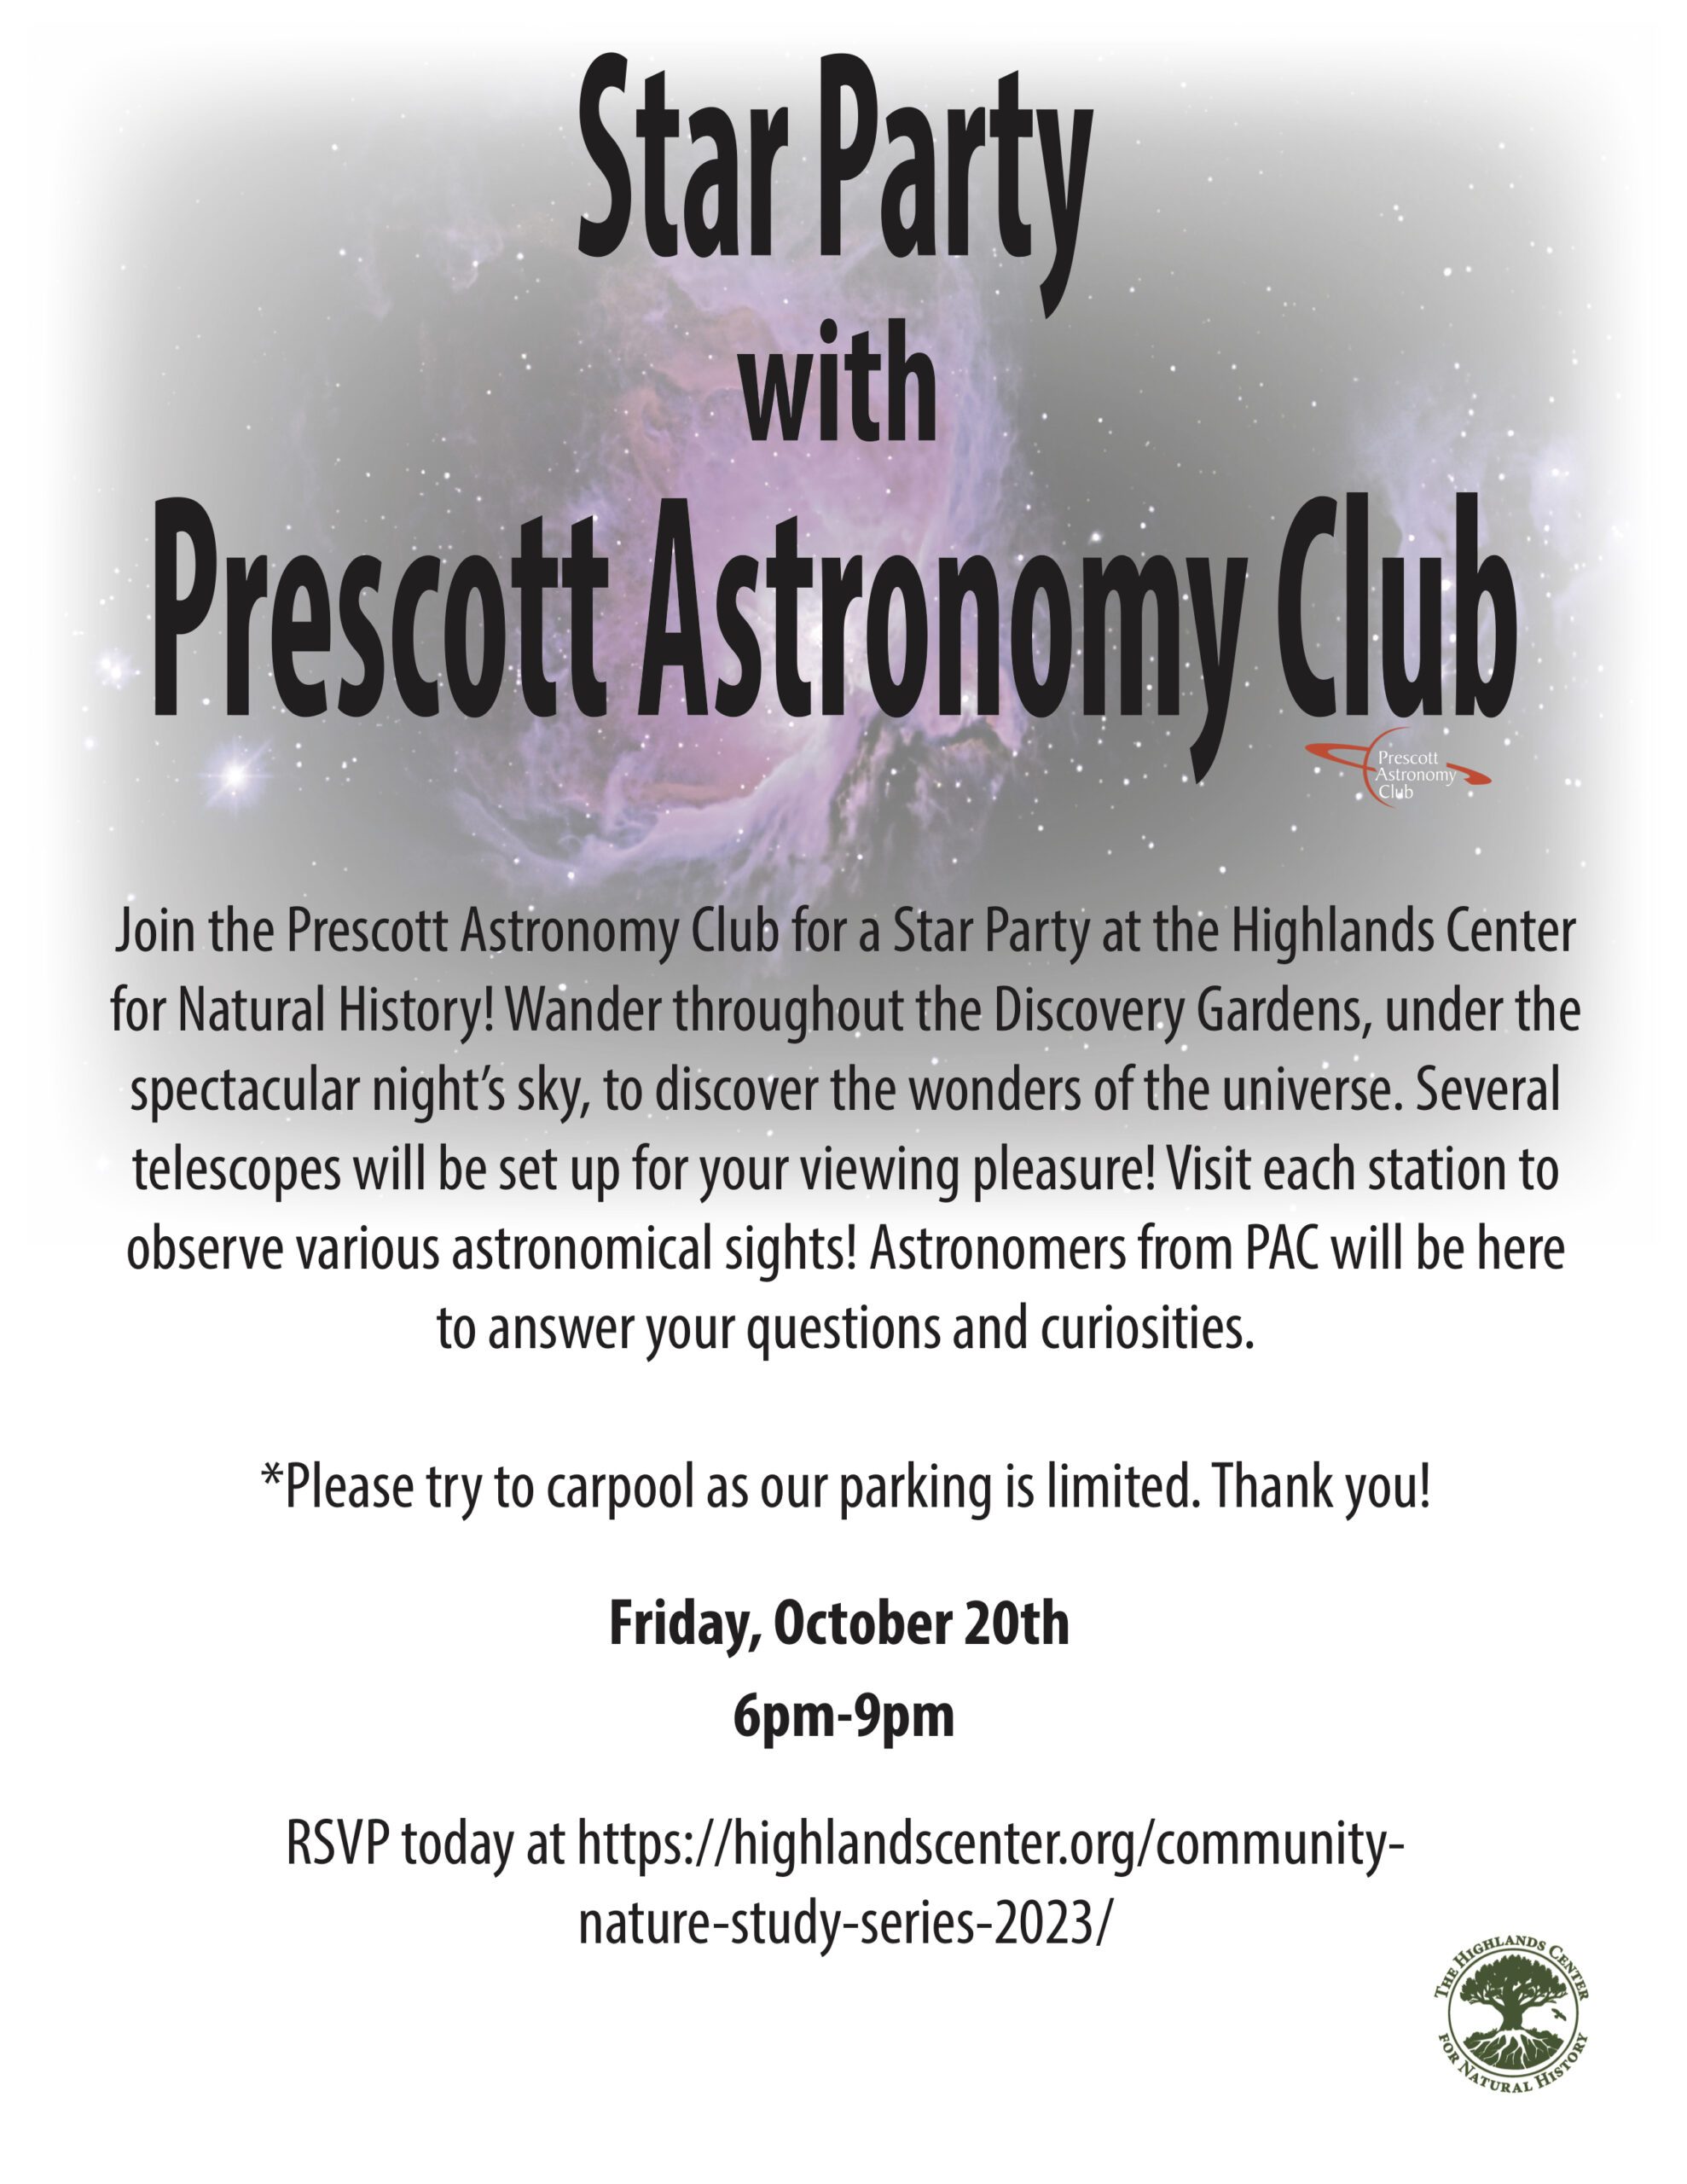 Prescott Astronomy Club